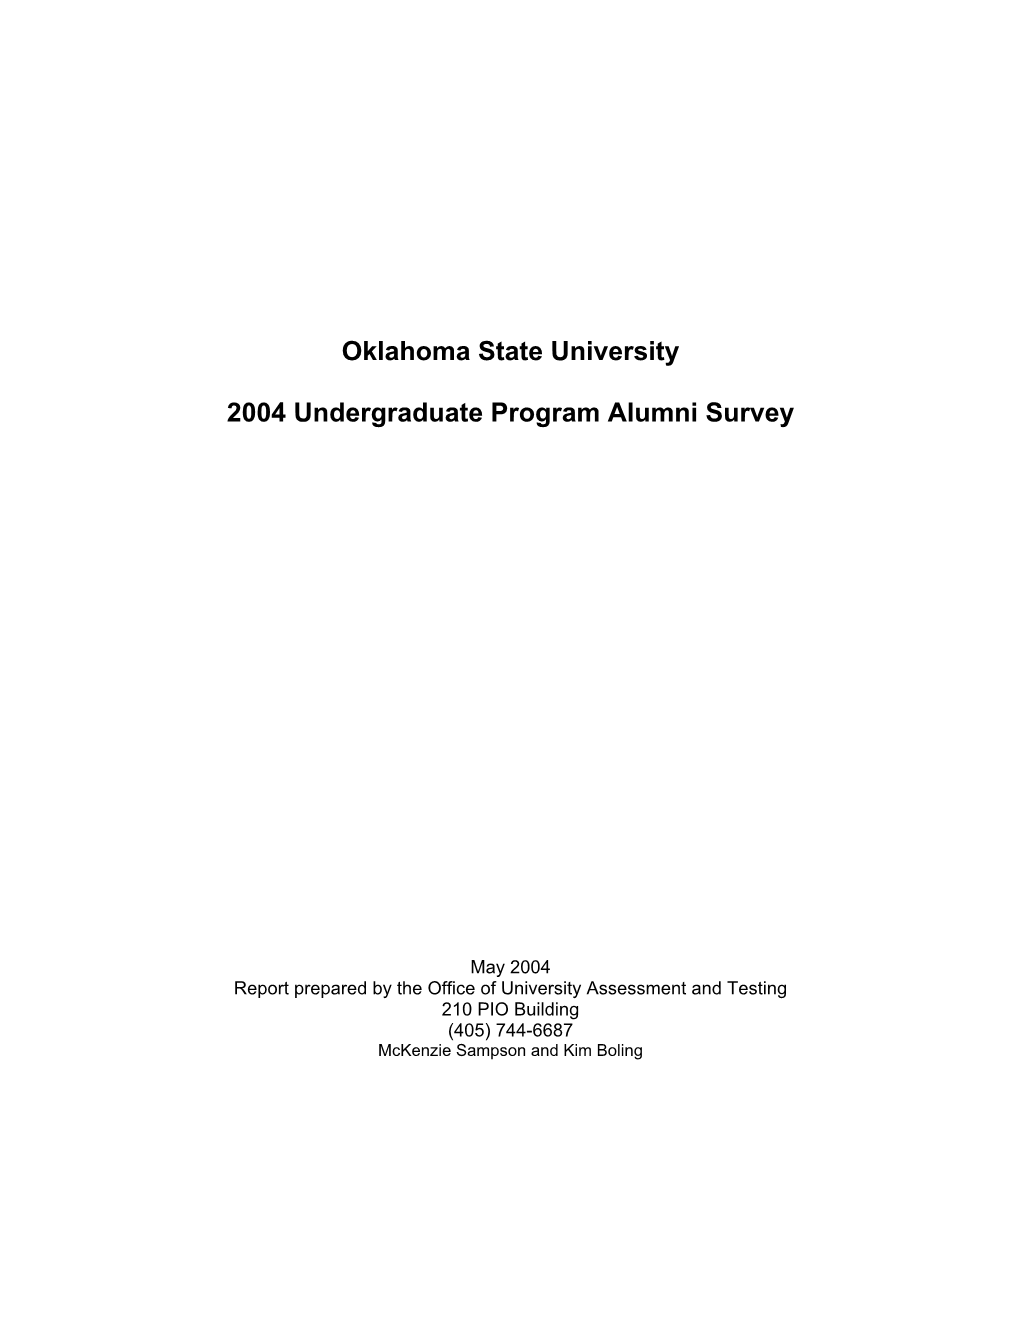 Oklahoma State University 2004 Undergraduate Program Alumni